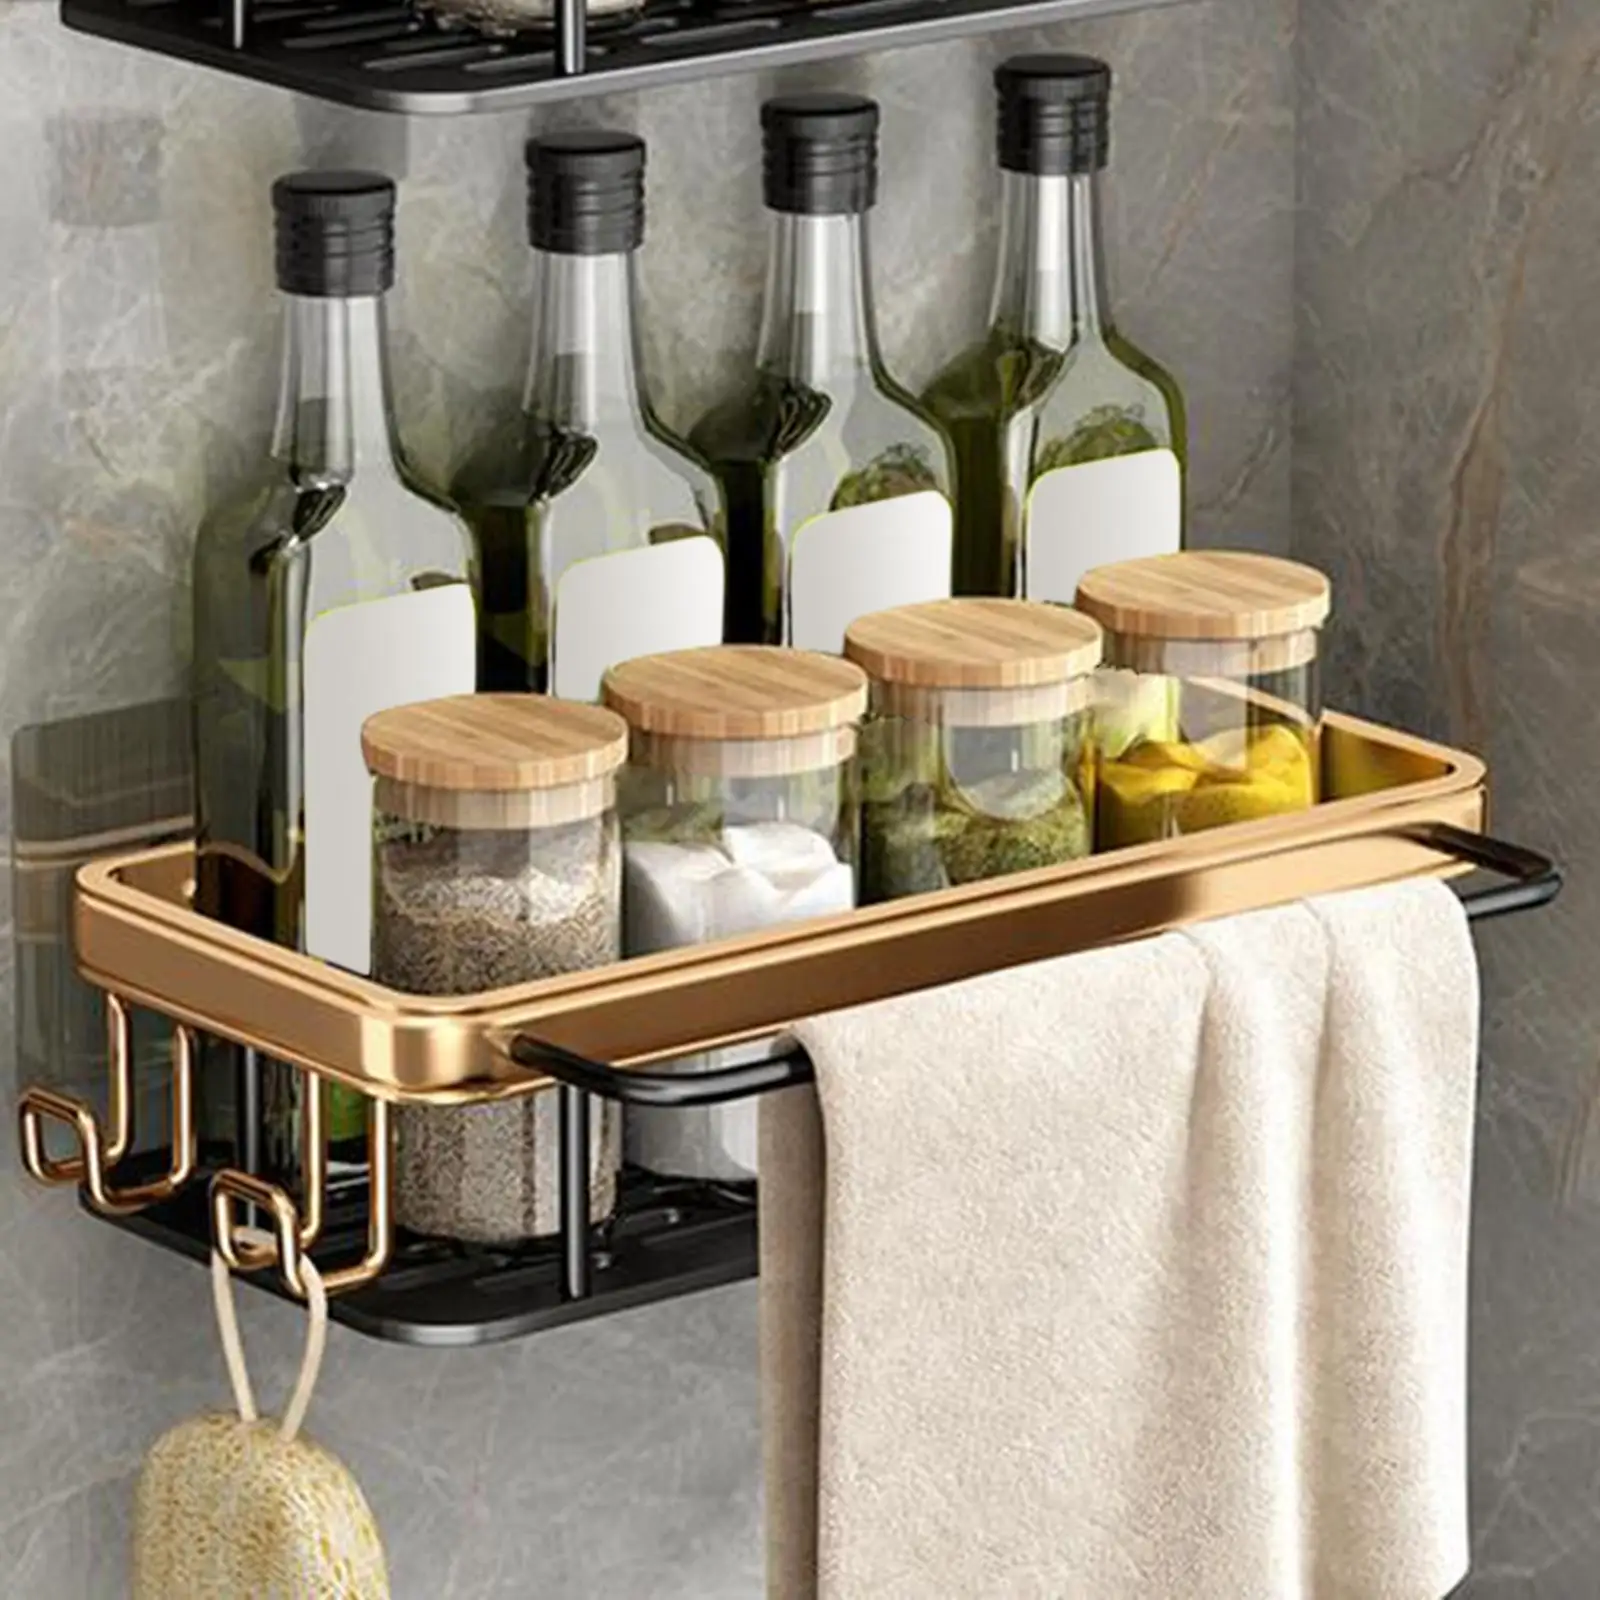  Shower Caddy aluminum Shampoo Holder Rustproof Storage Rack for Toilet Kitchen Restroom Bathroom Accessories Set